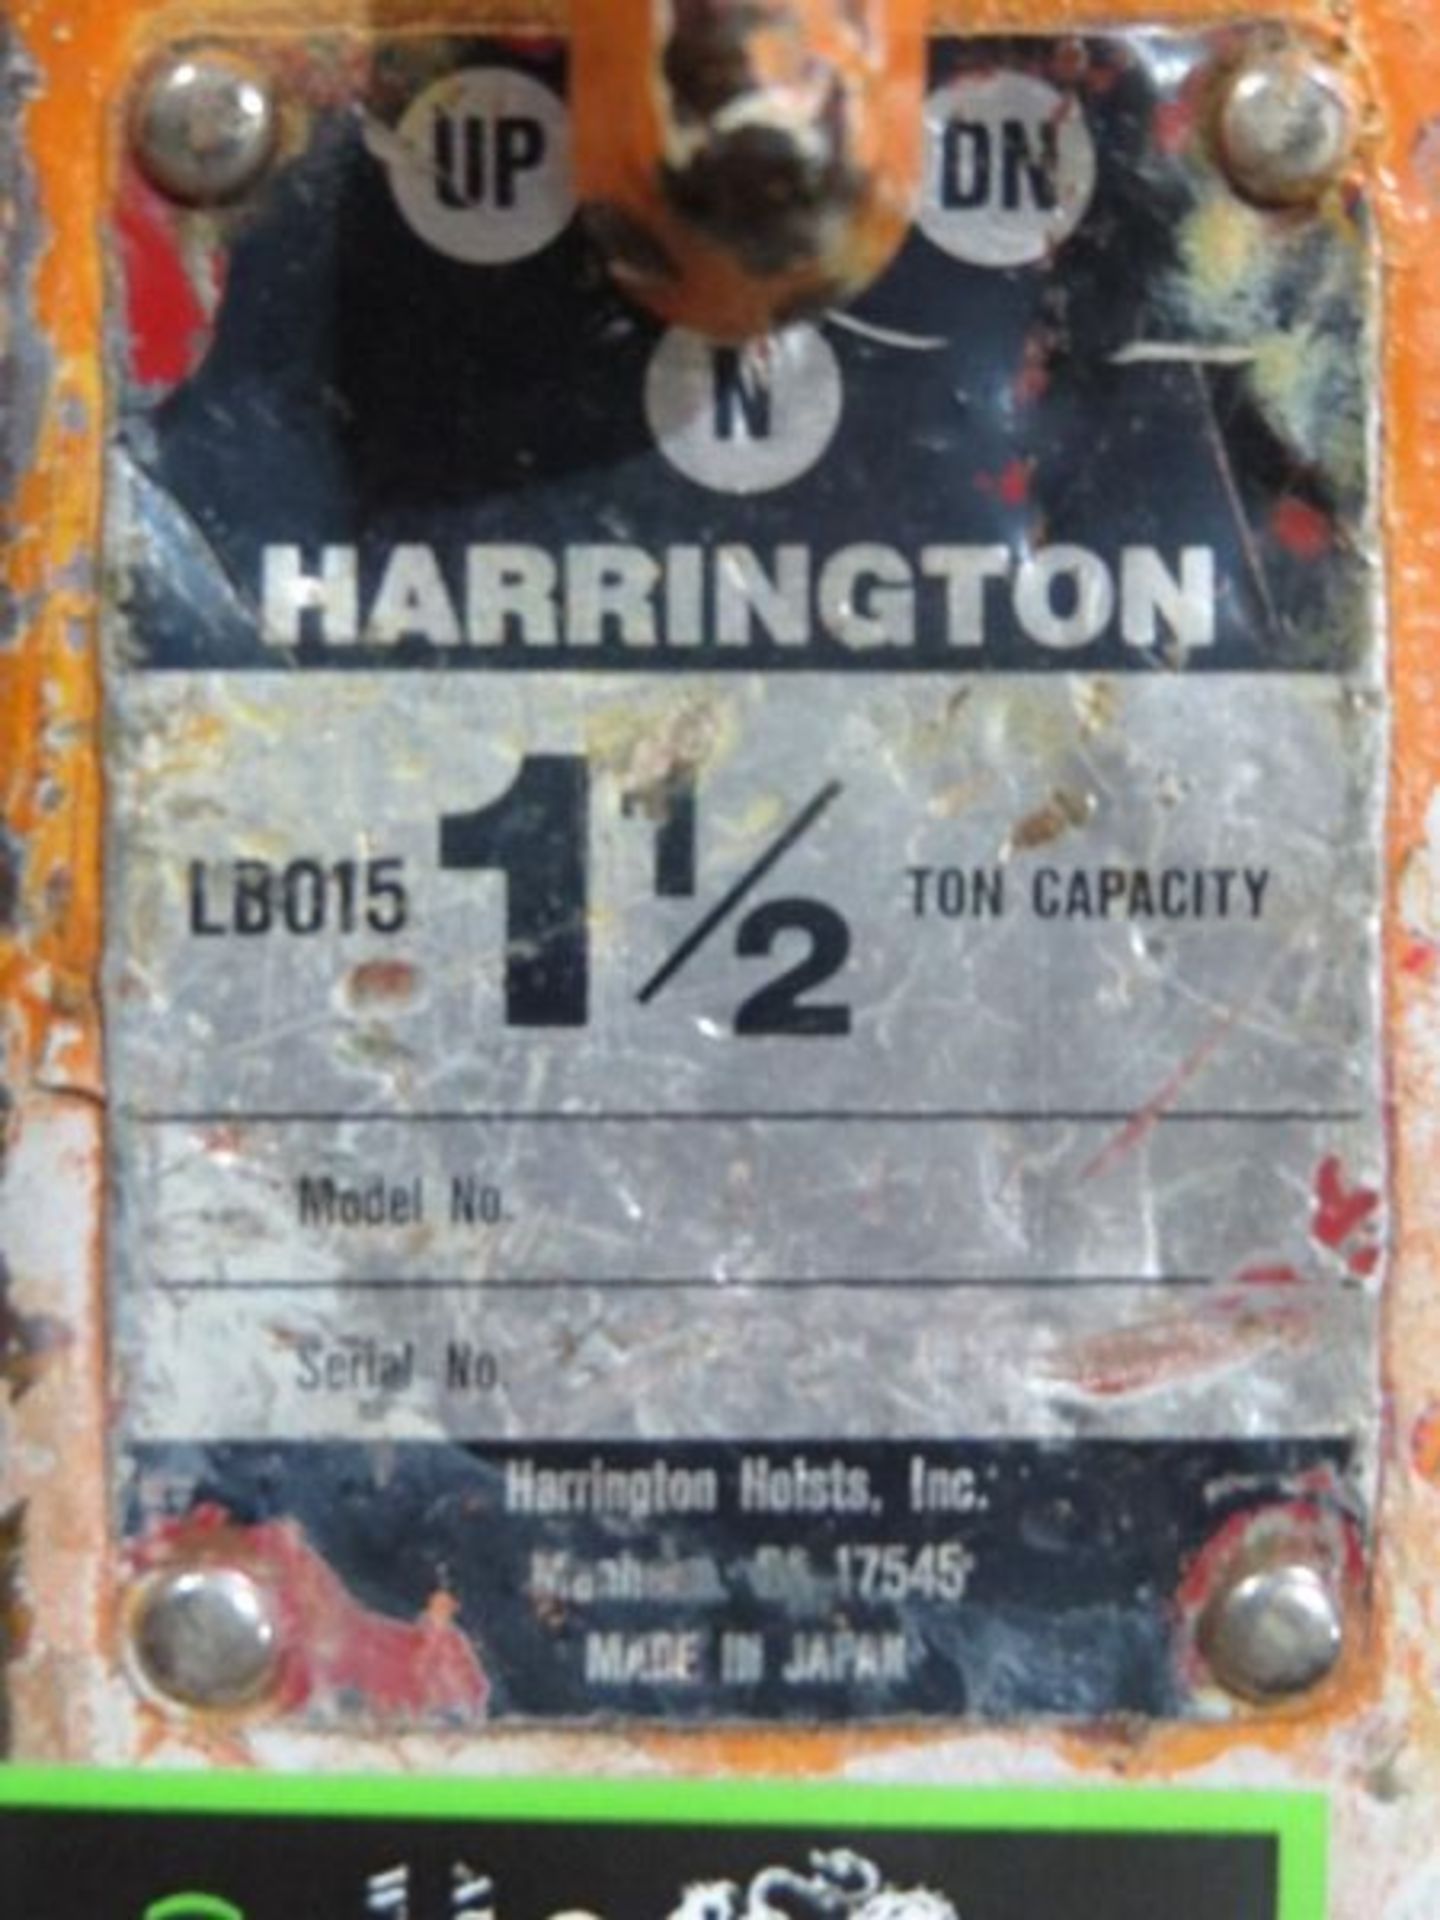 Harrington Lever Chain Hoist- MFR - Harrington 1-1/2 Ton - Image 4 of 4